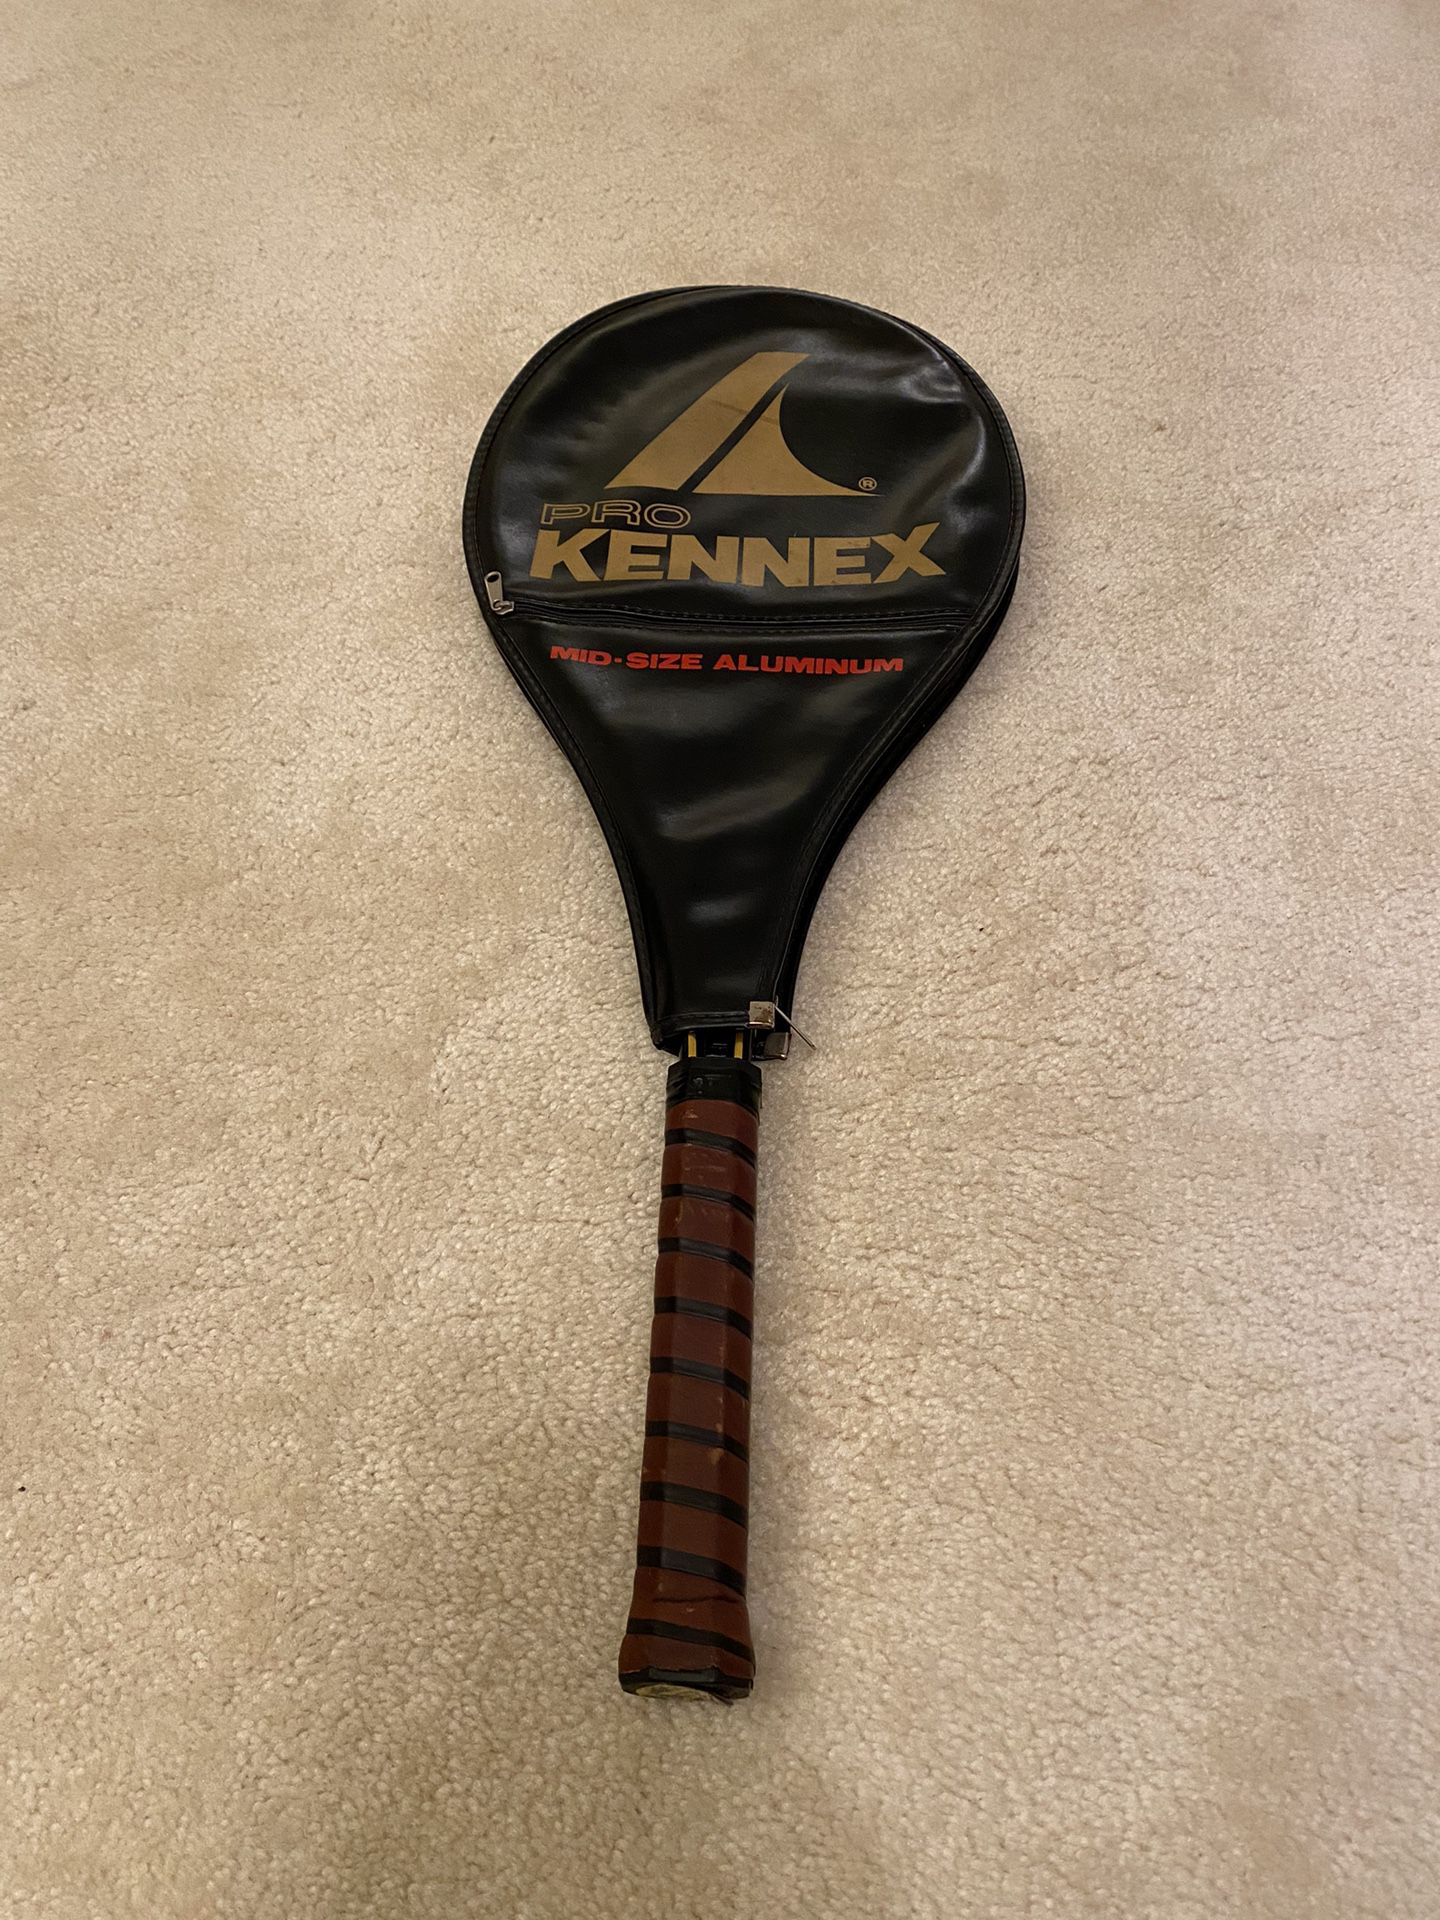 Great Condition Pro Kennex Tennis Racket 